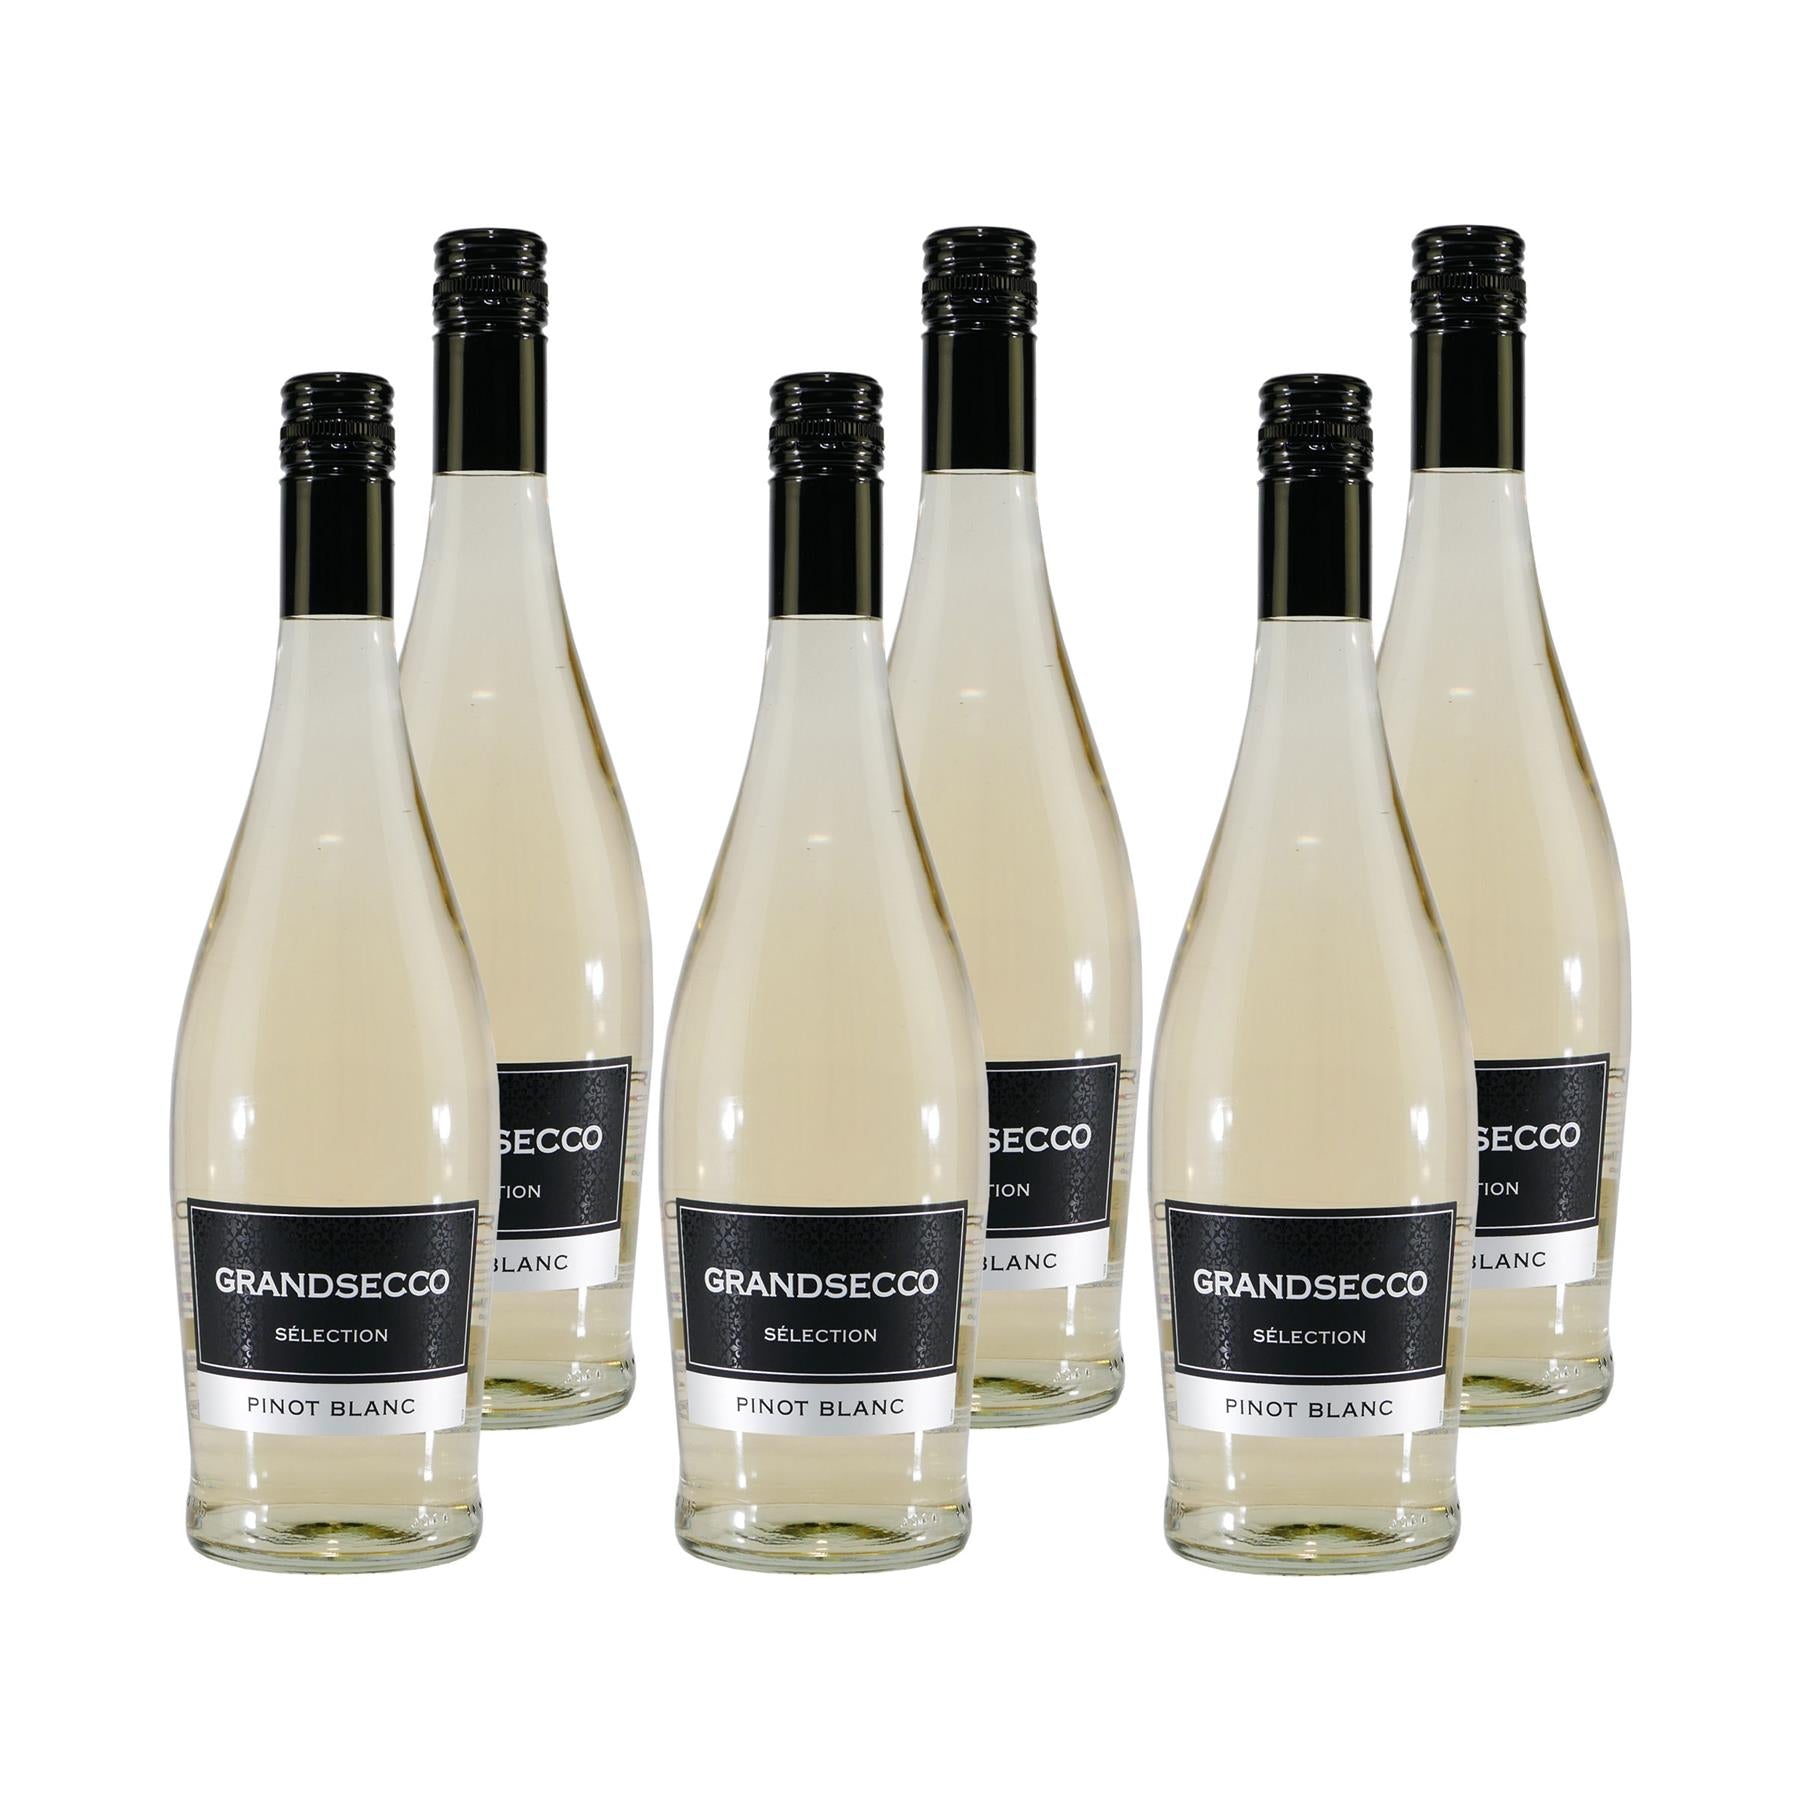 GRANDSECCO Pinot Blanc -trocken- (6x0,75L)